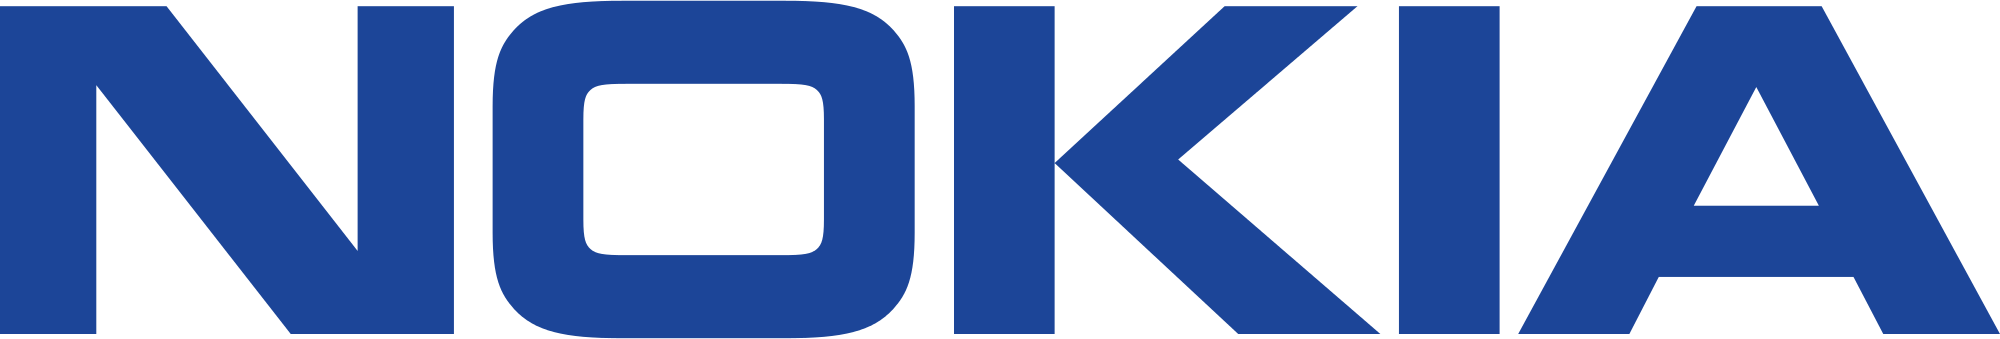 Nokia Logo Png.